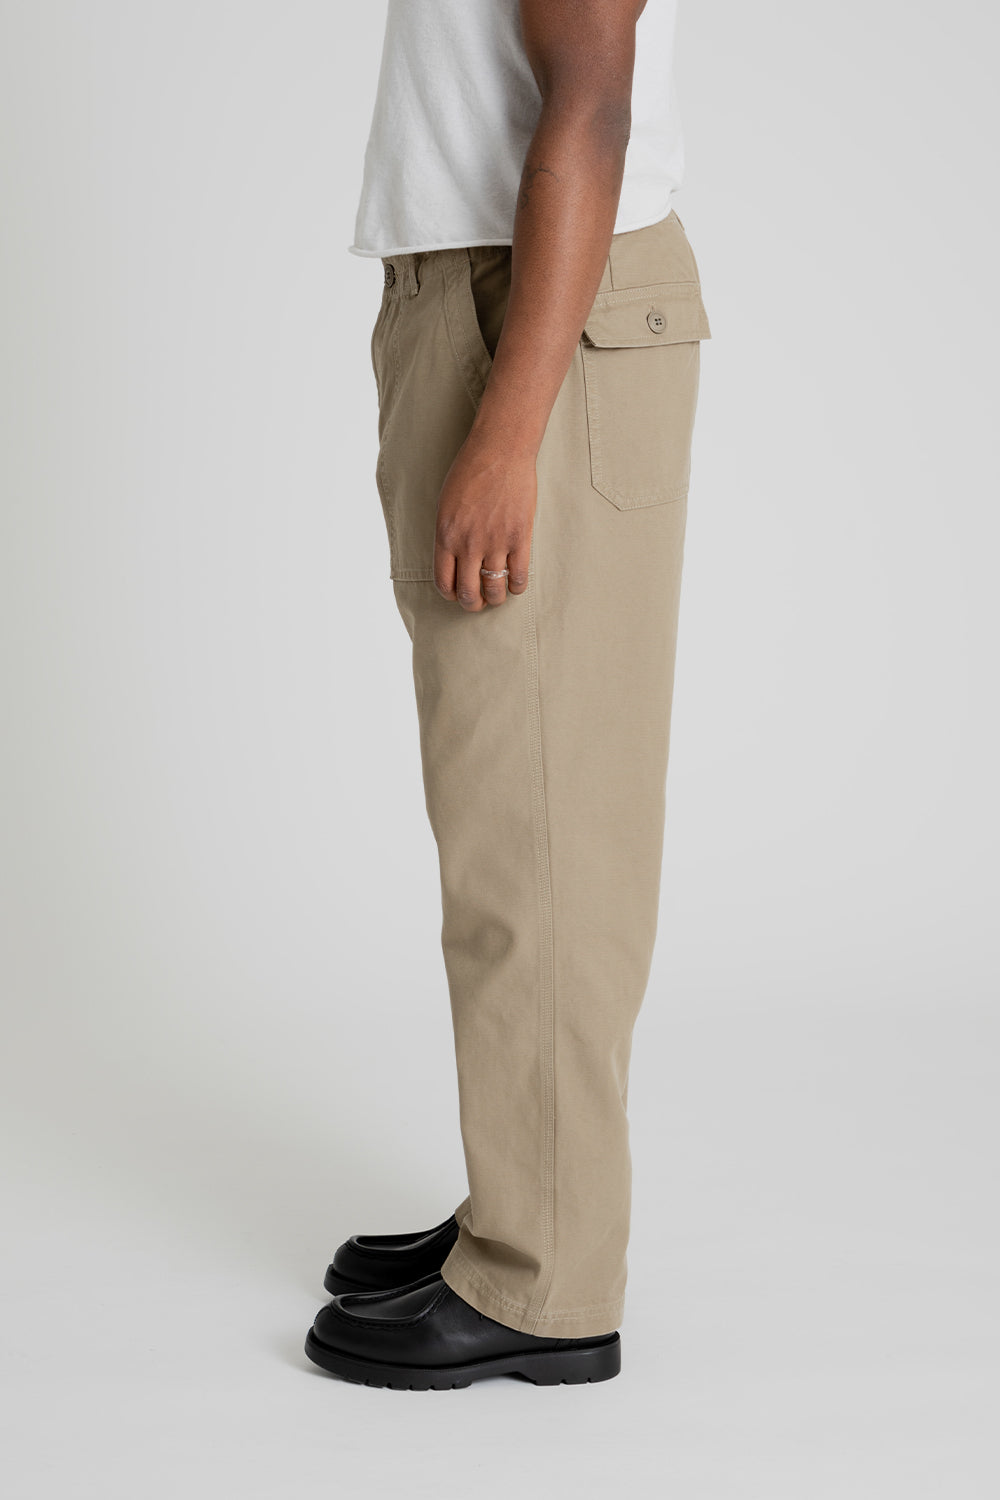 Frizmworks Jungle Cloth Fatigue Pants Khaki Beige Detail 01